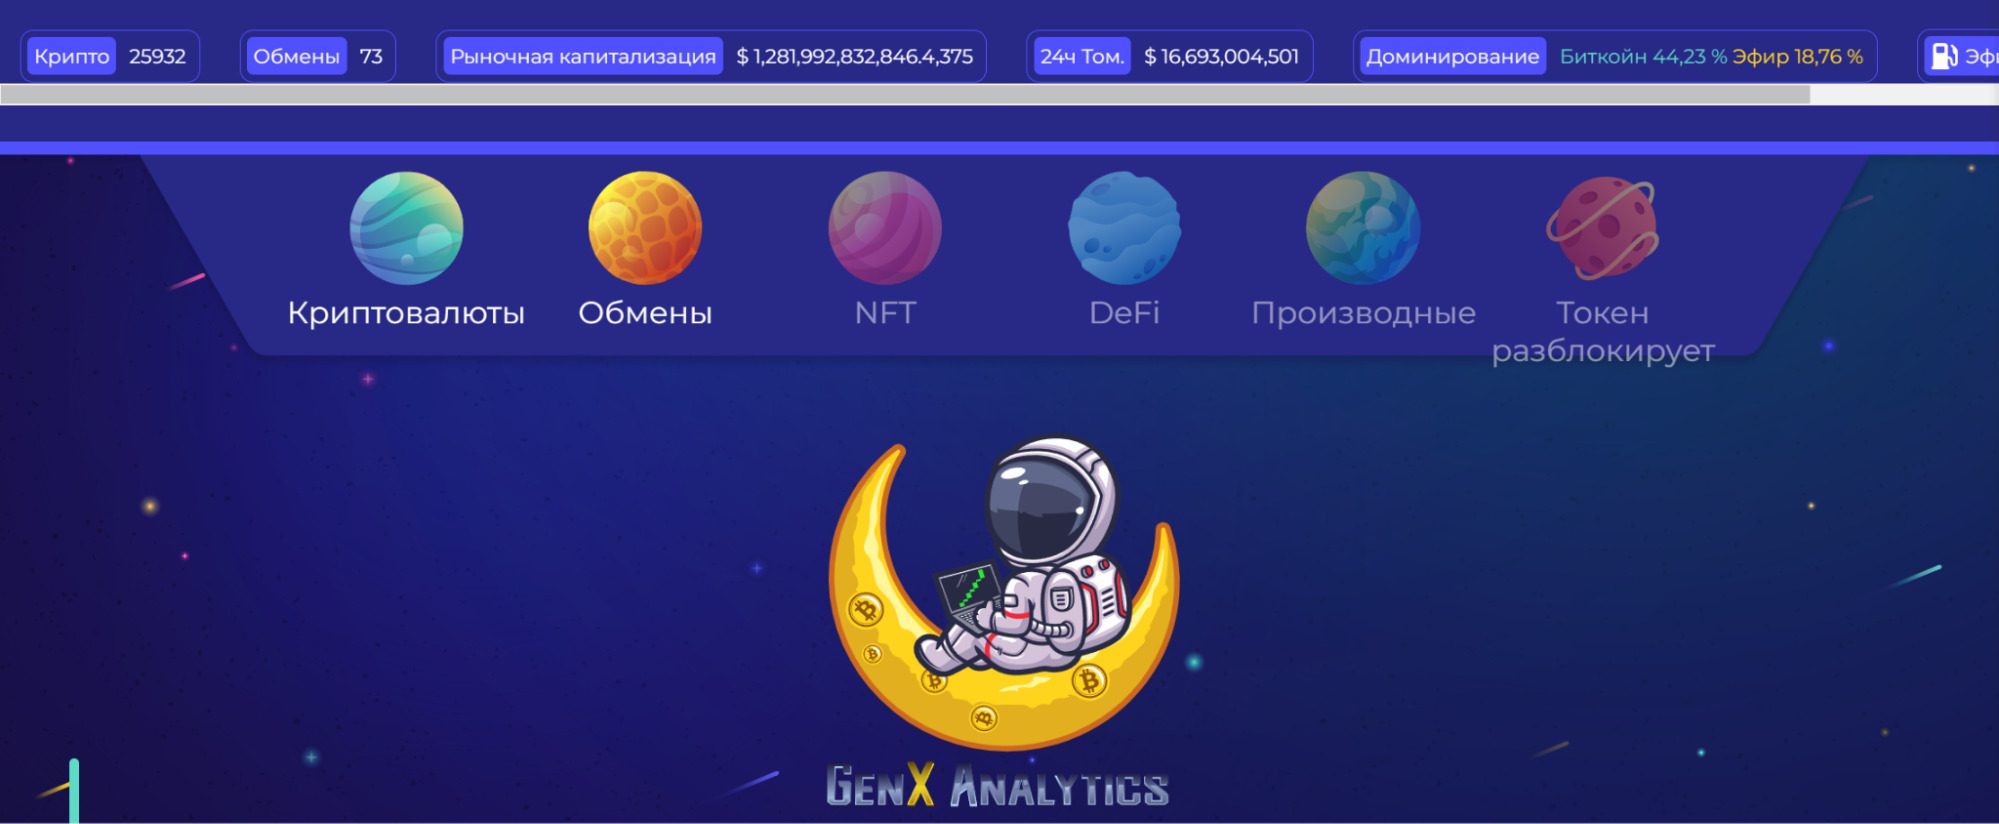 Genx Analytics — официальный сайт